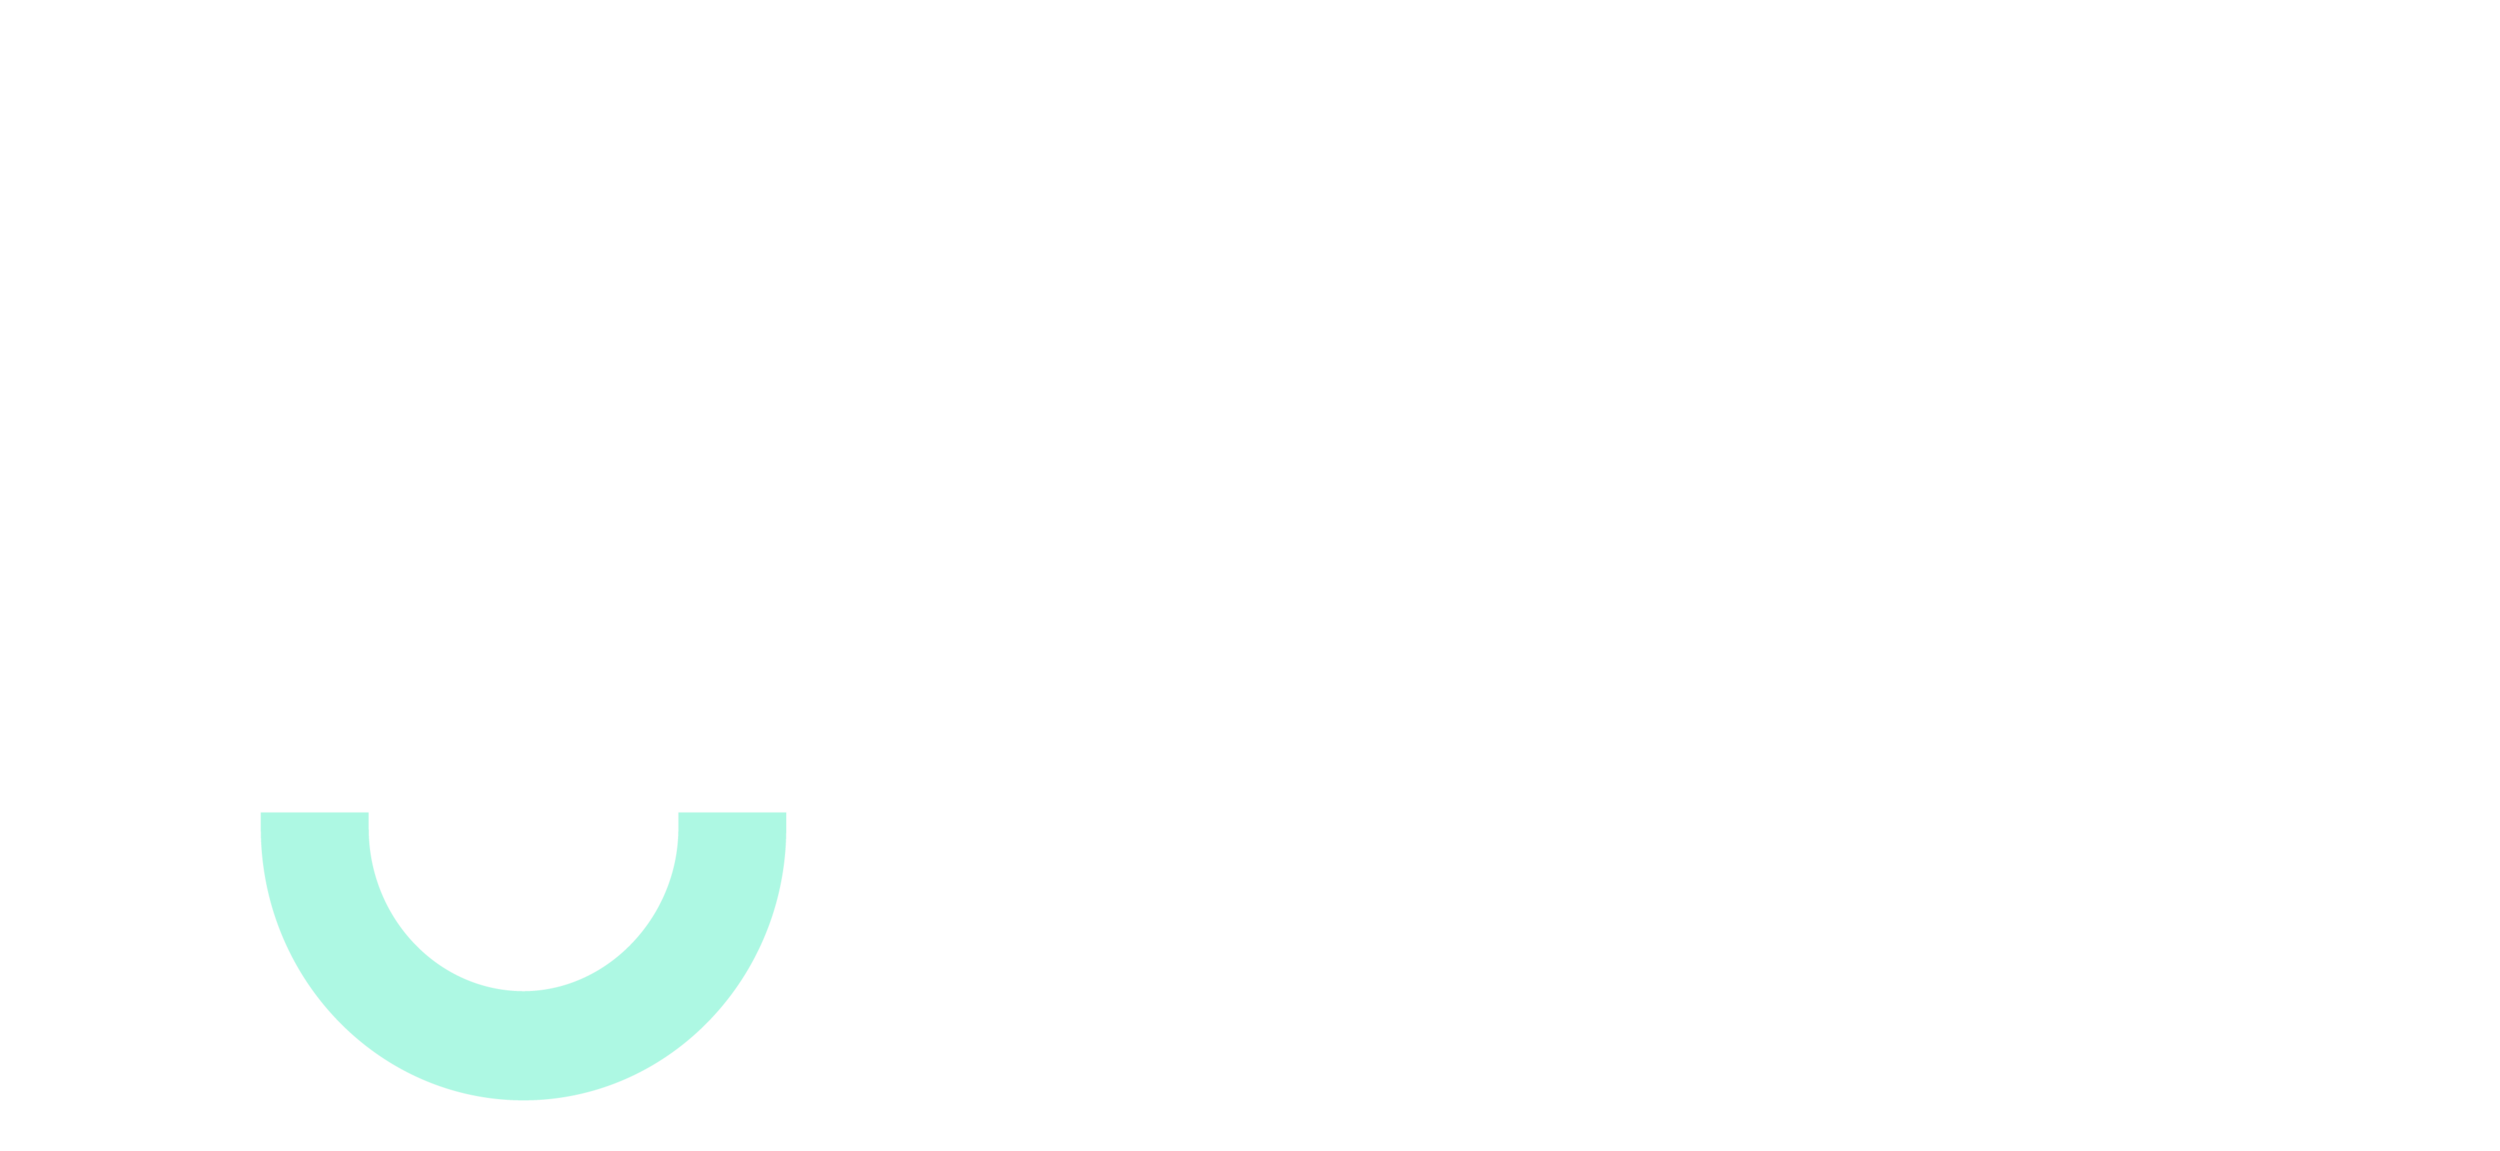 Ignite_New_Light Logo.png